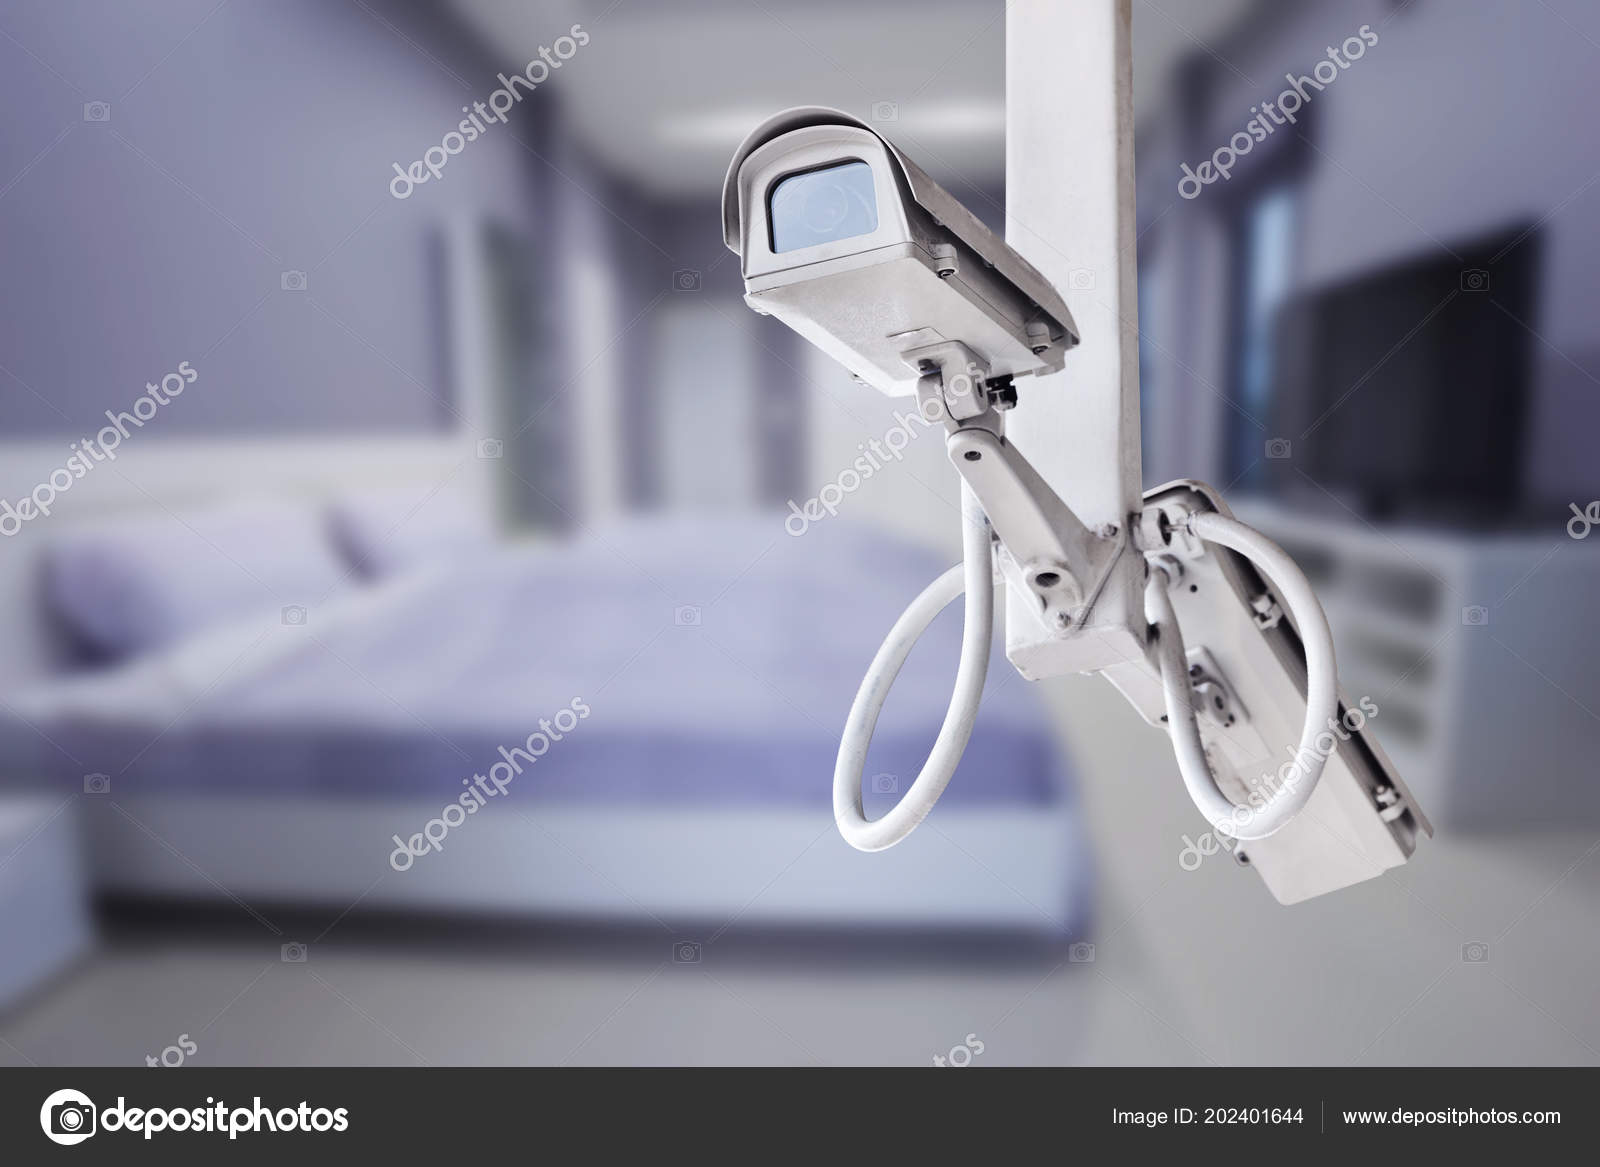 bedroom surveillance camera